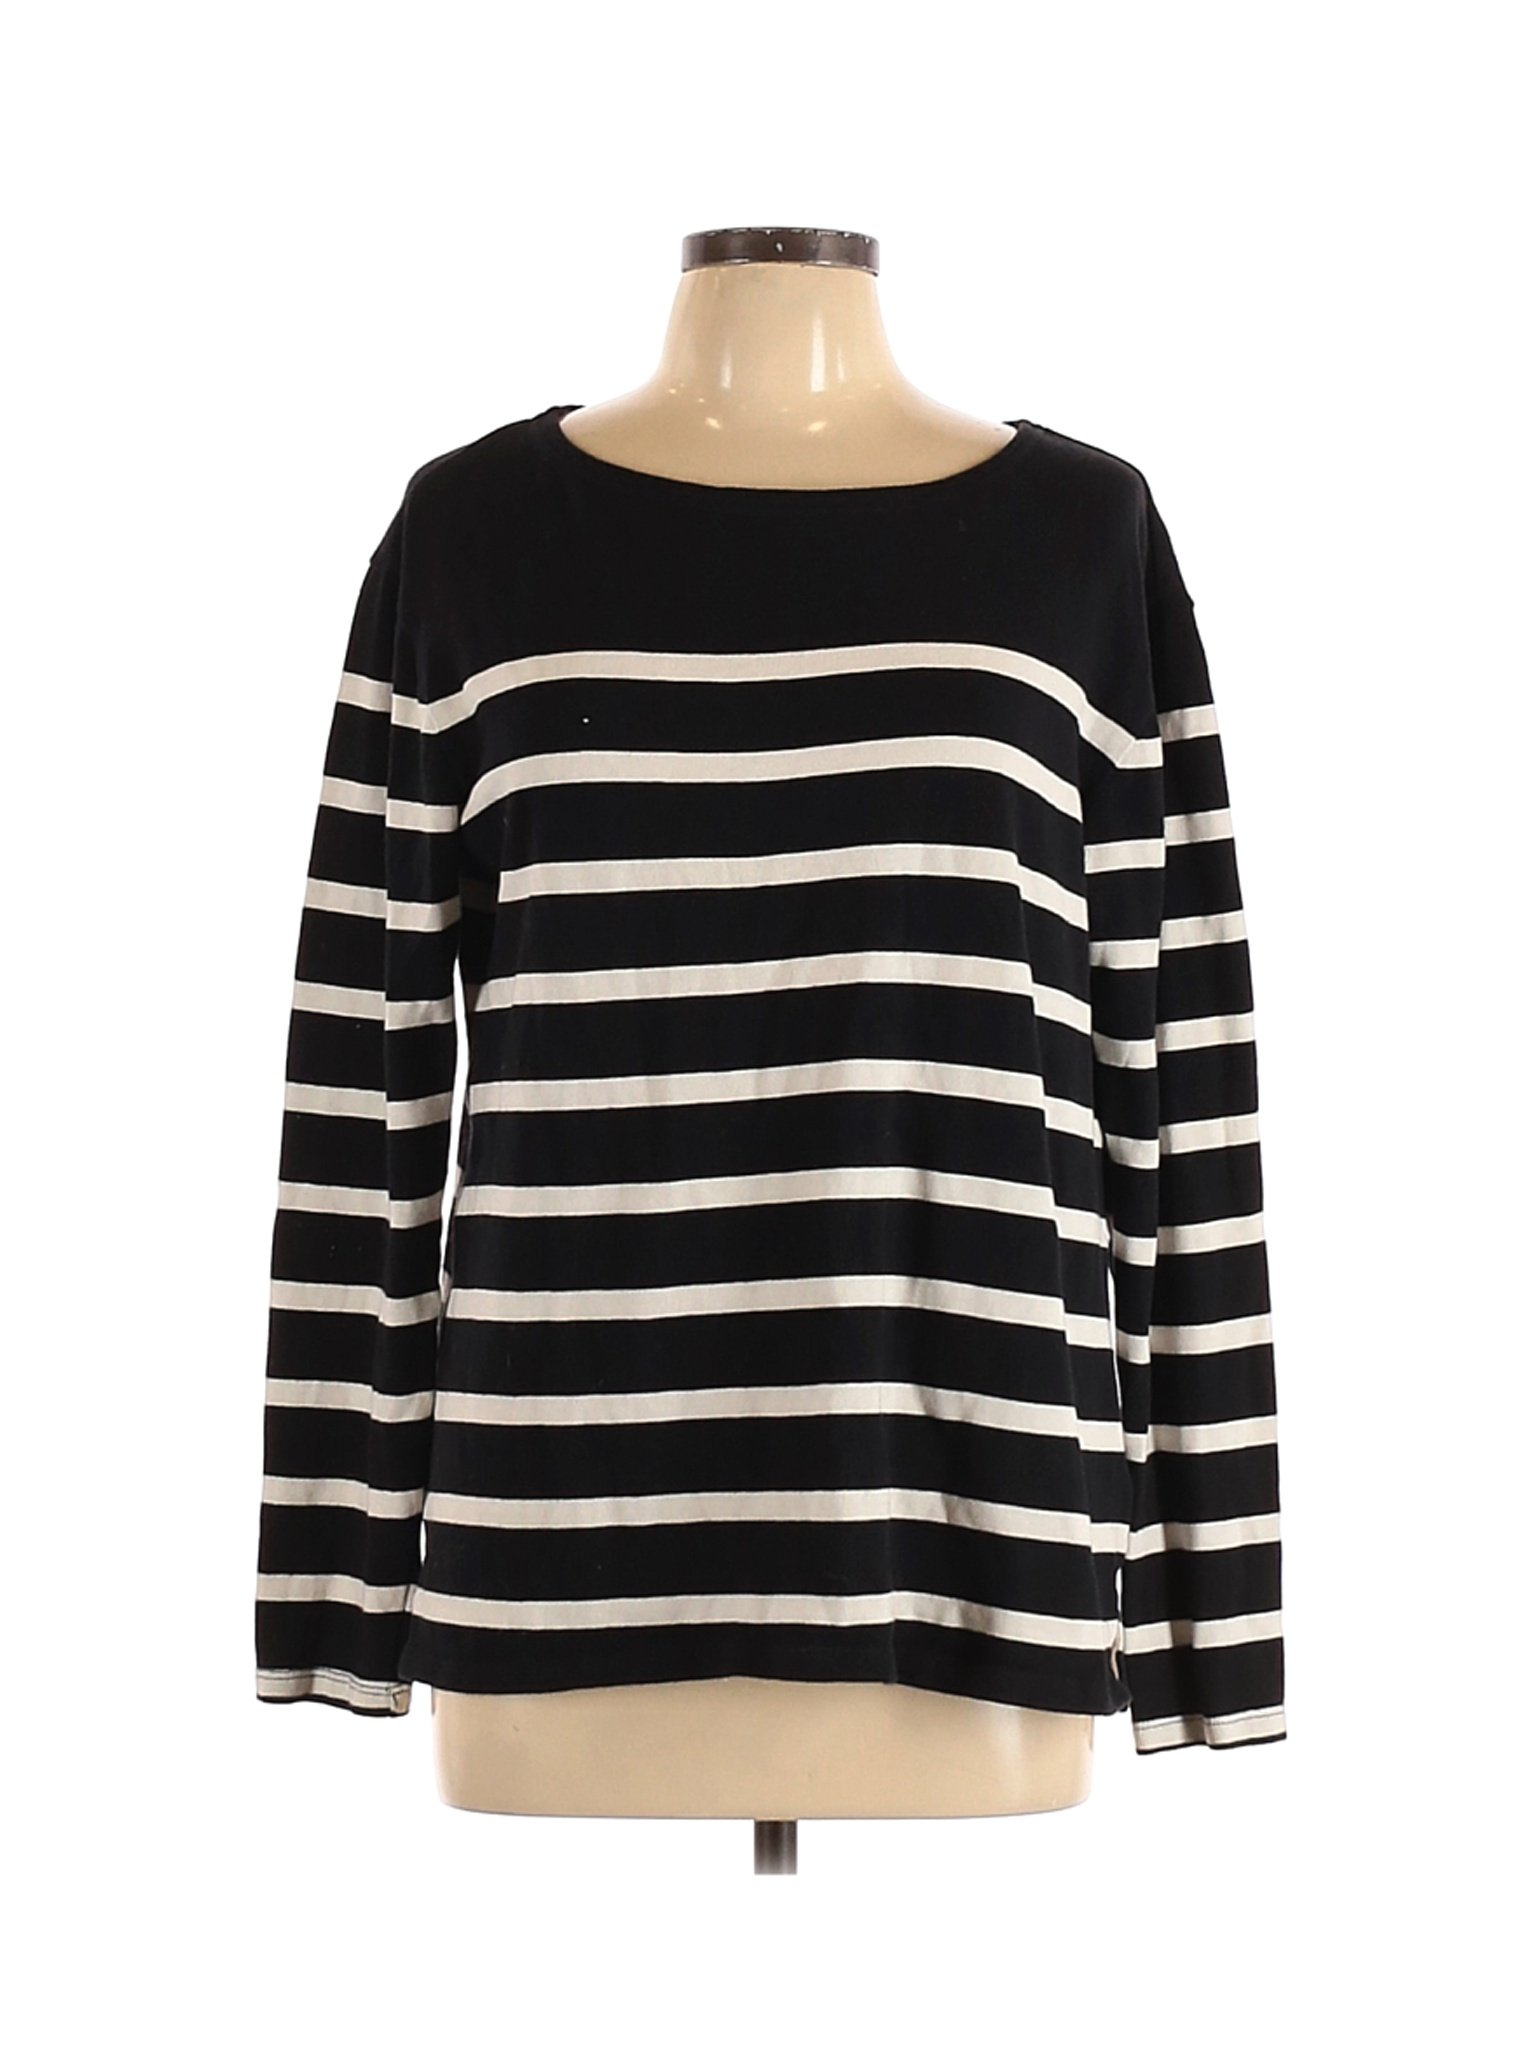 Old Navy Women Black Pullover Sweater L | eBay